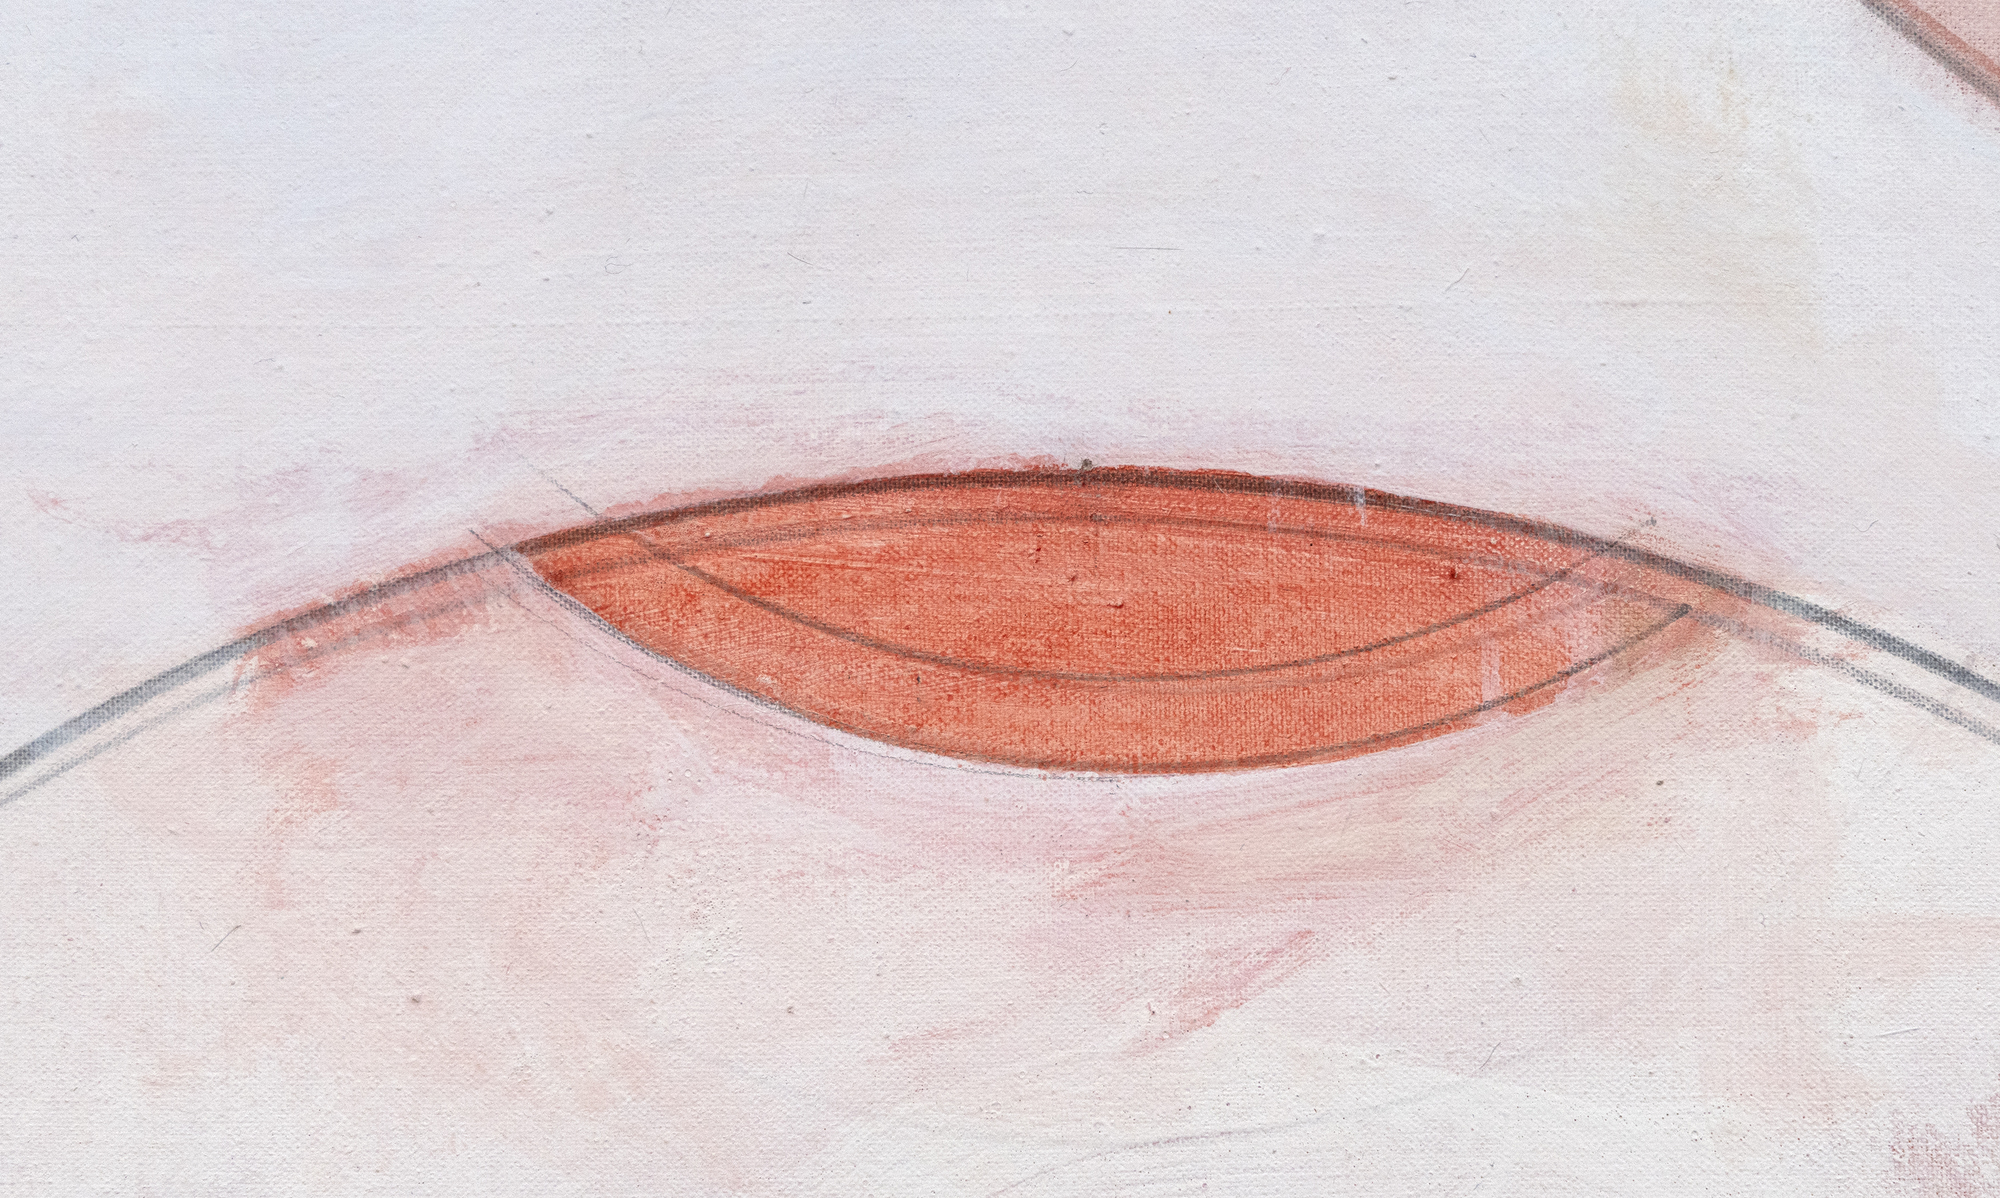 HASSEL SMITH - Eyeball to Eyeball - oil on canvas - 46 x 46 in.